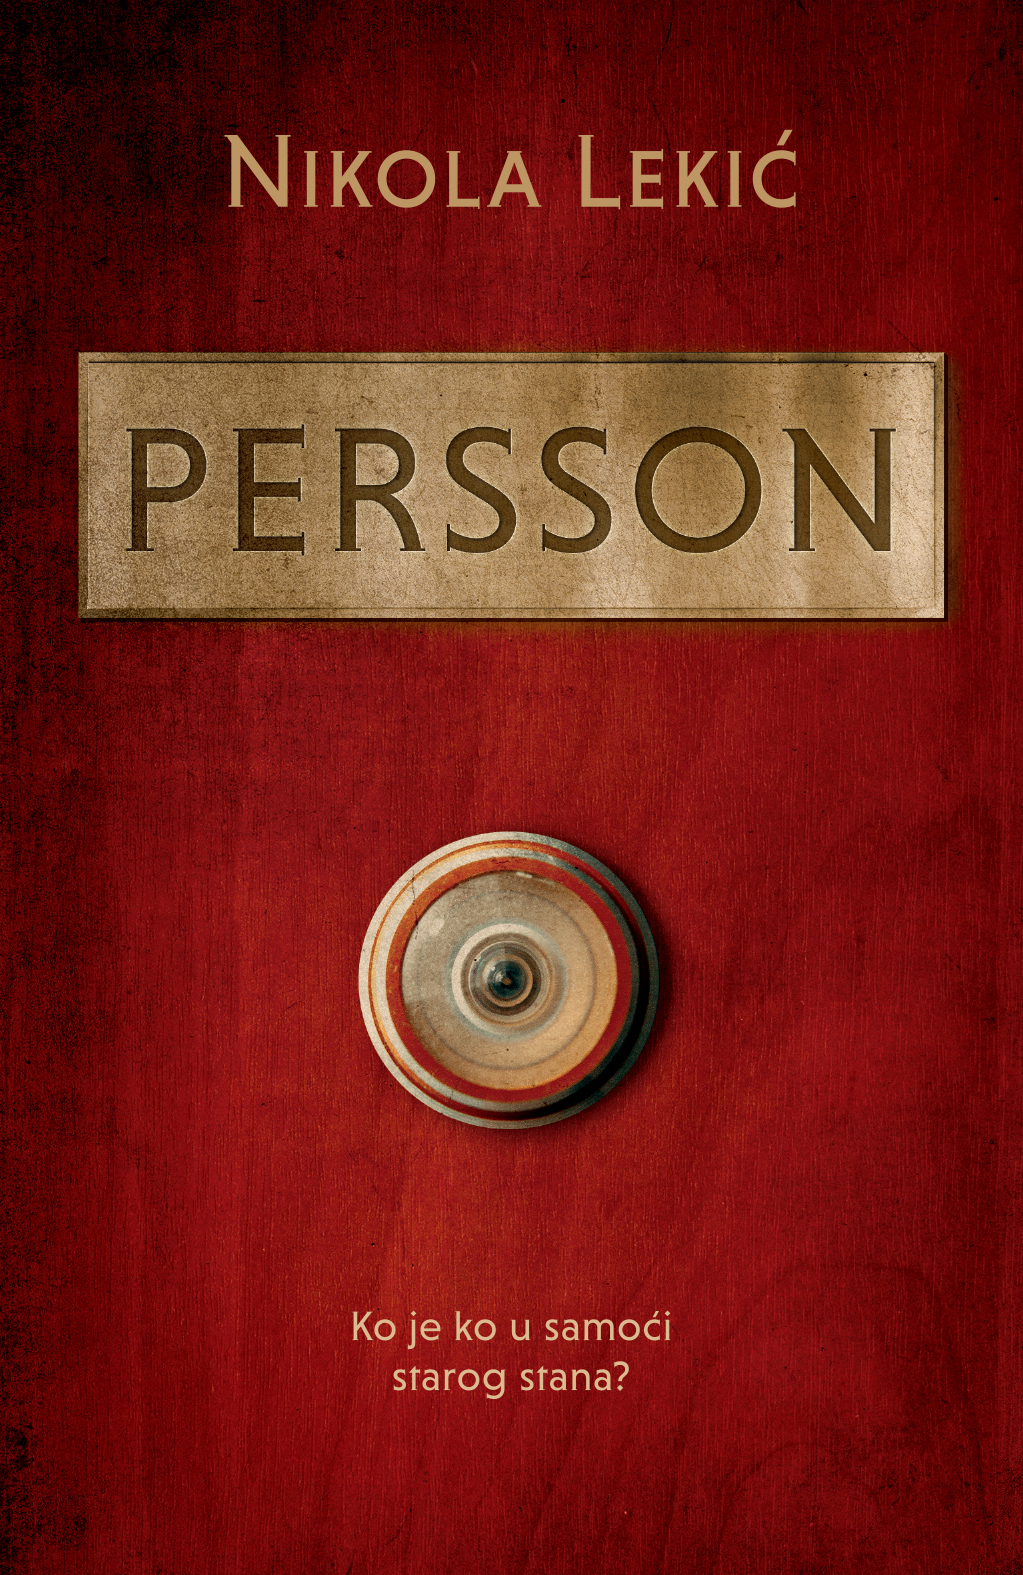 Promocija romana “Persson” Nikole Lekića